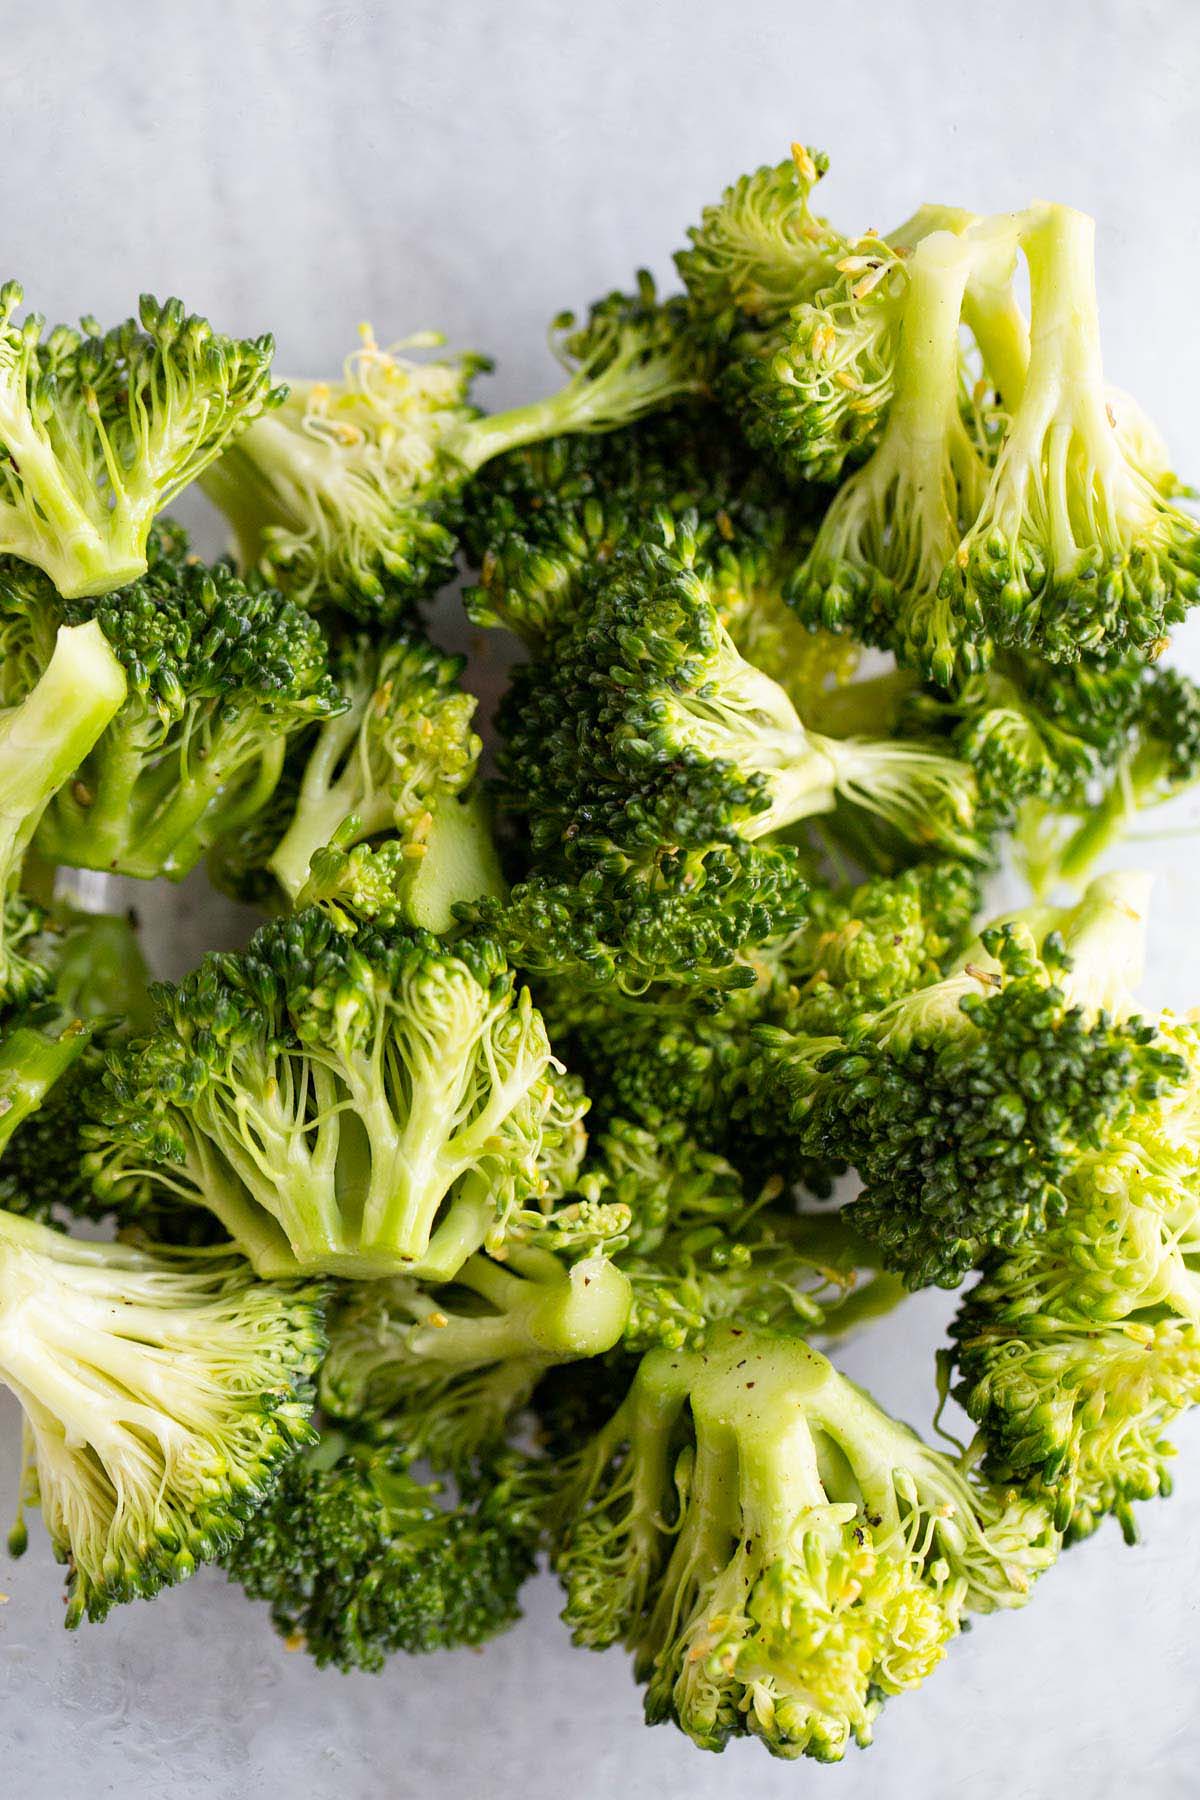 Raw broccoli florets.